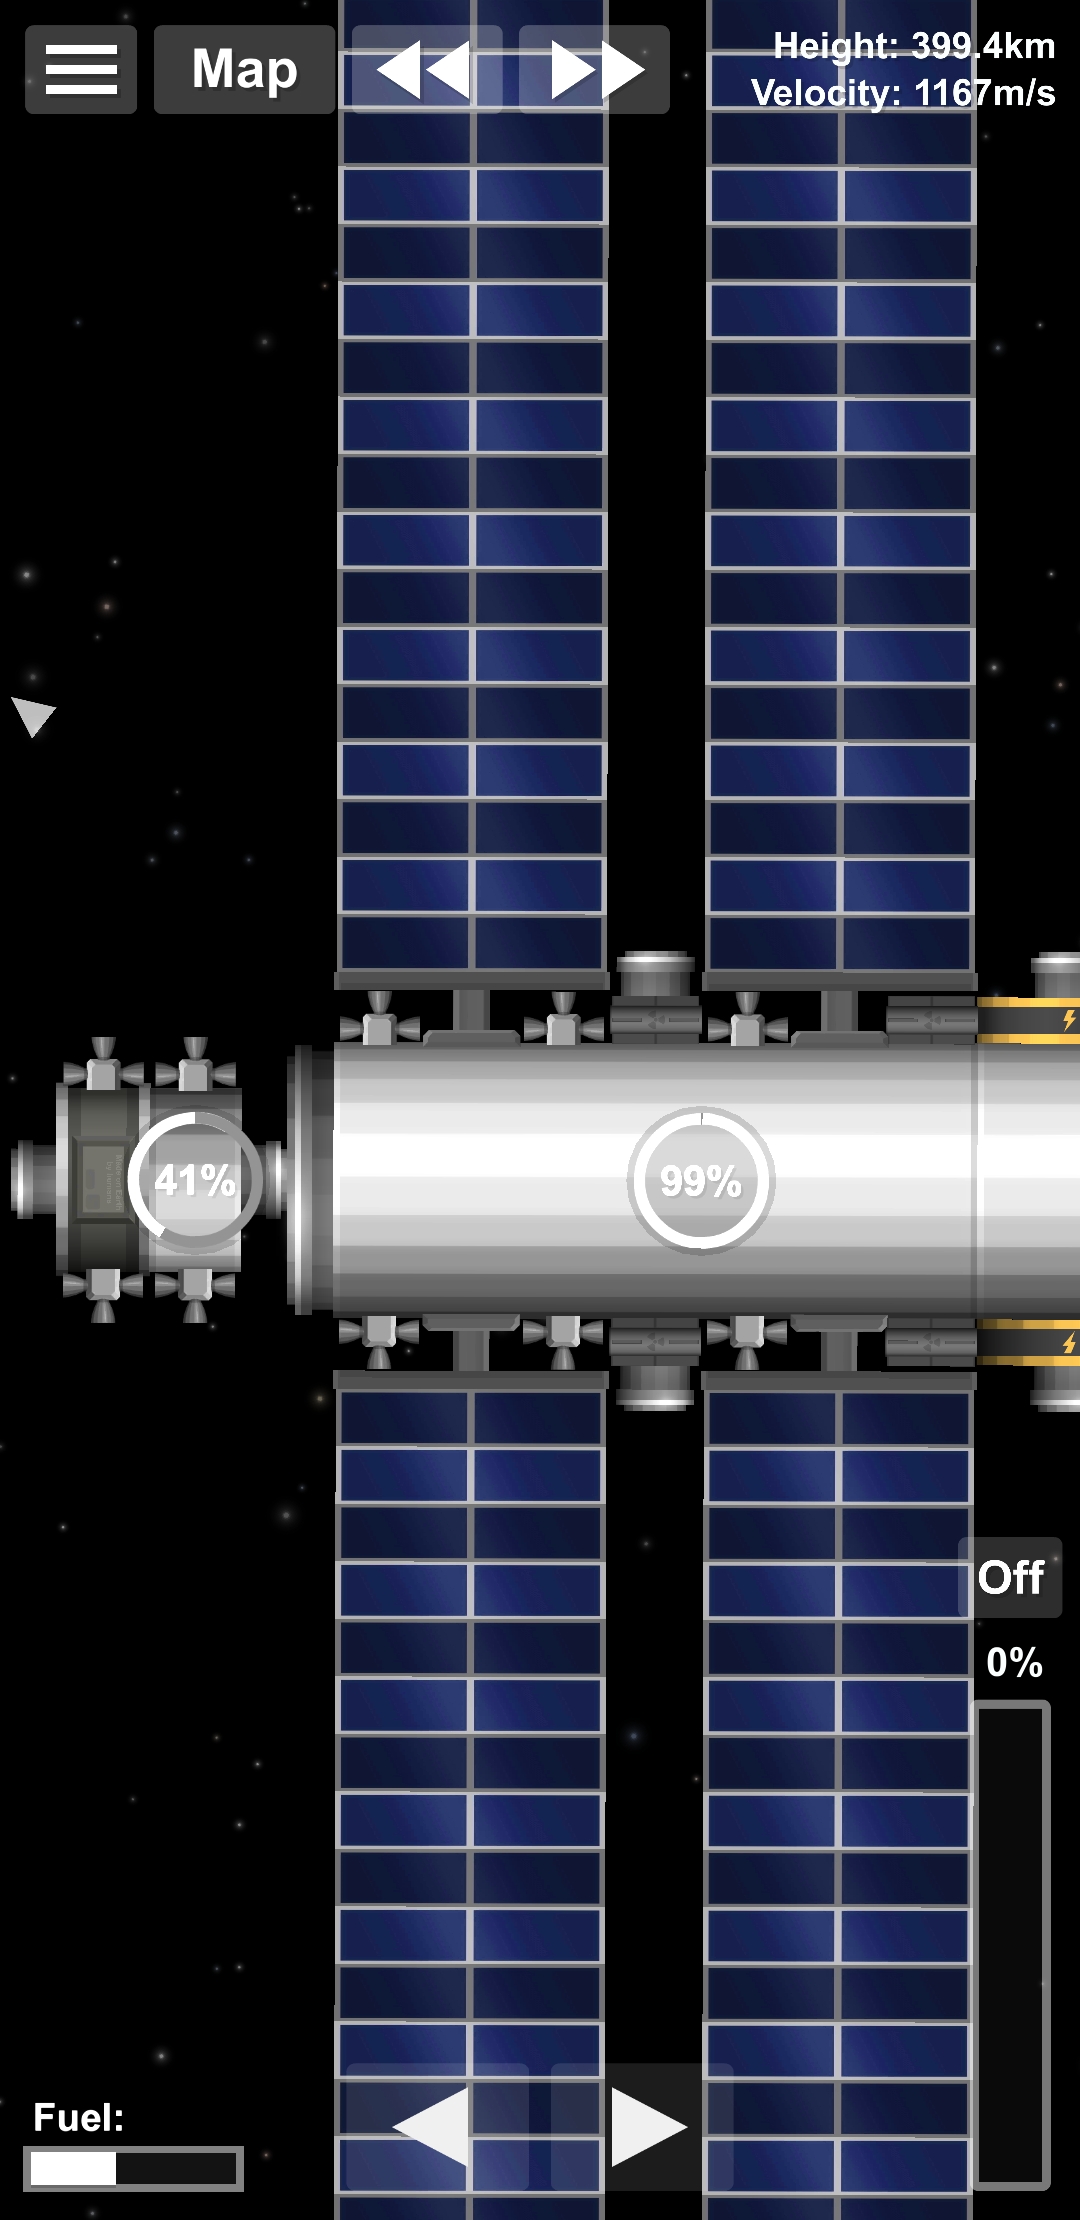 space flight simulator docking